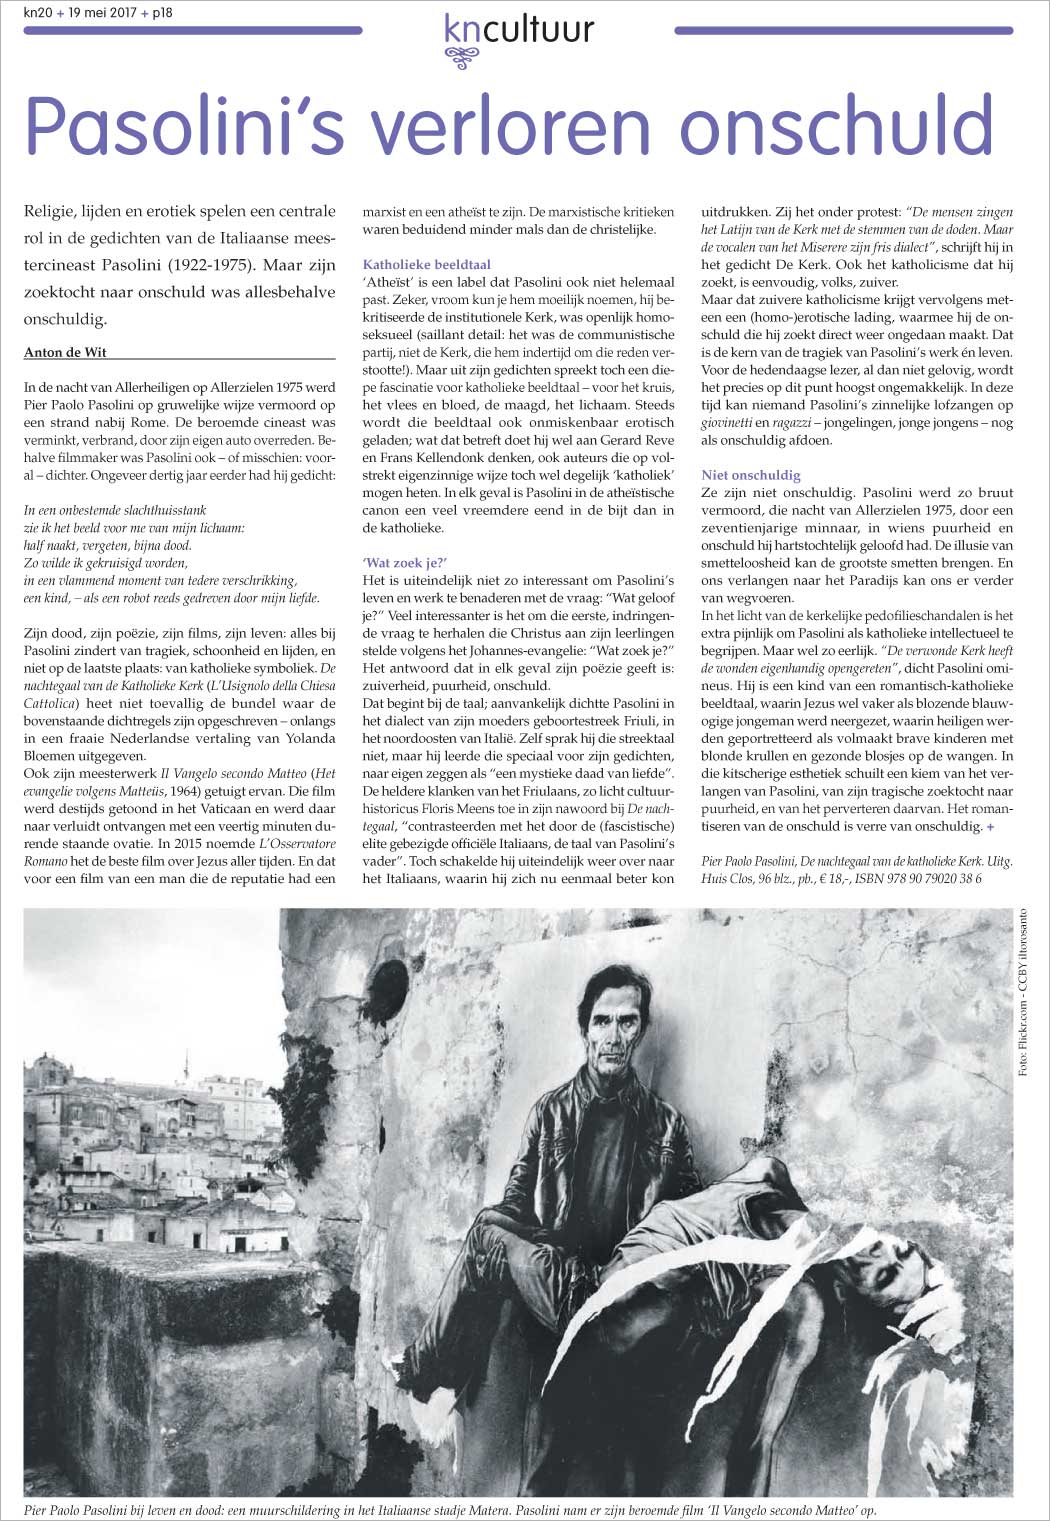 Katholiek Nieuwsblad over Pasolini